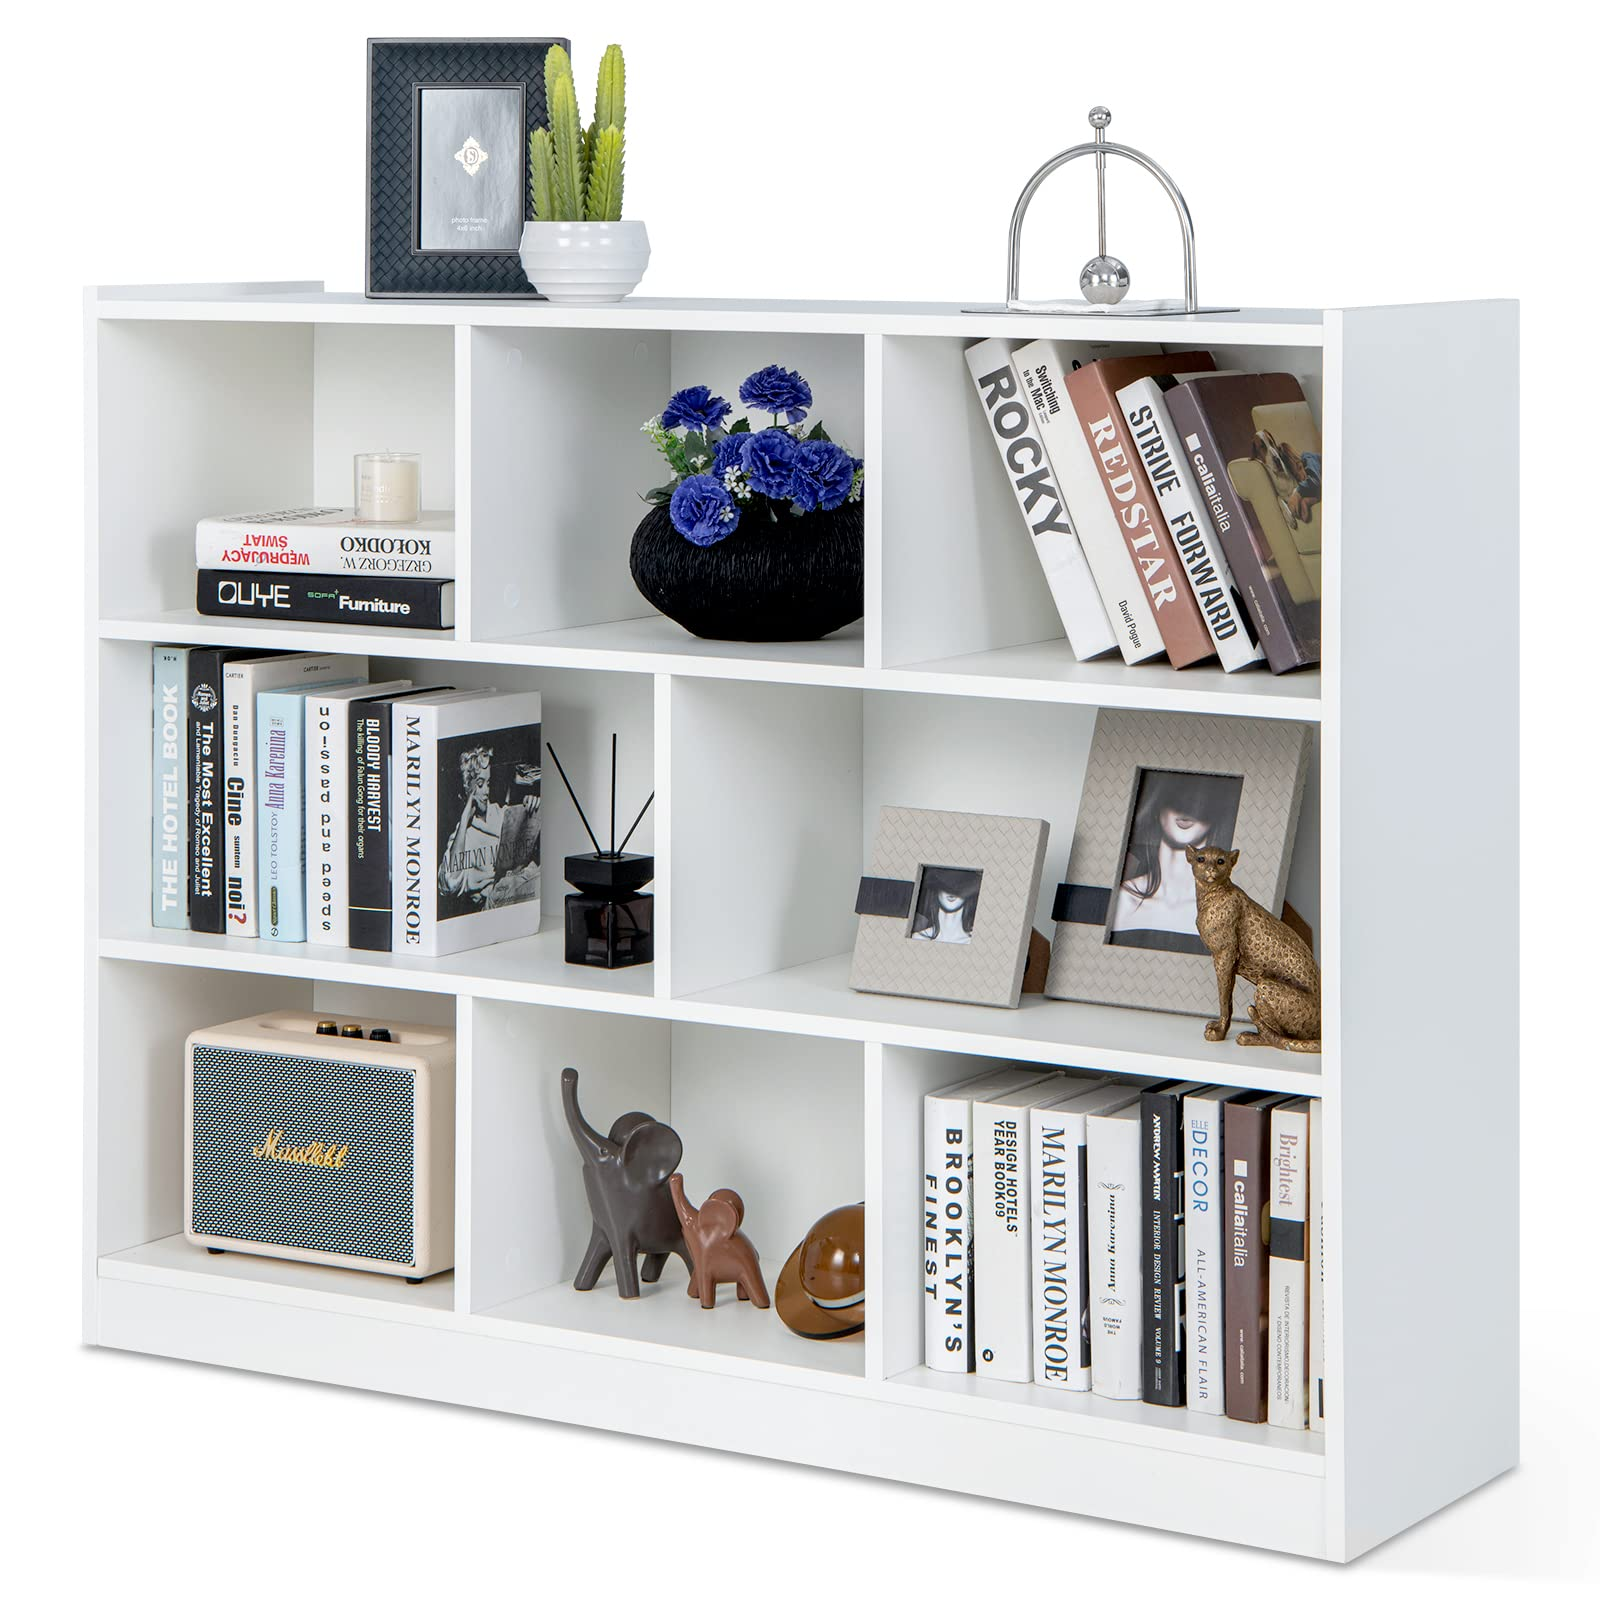 REHOOPEX Book Shelf, Design Tall Shelves with Steel Frame, Display Bookcase  Standing Organizer, Modern Decorative Wood Storage Shelves for Bedroom